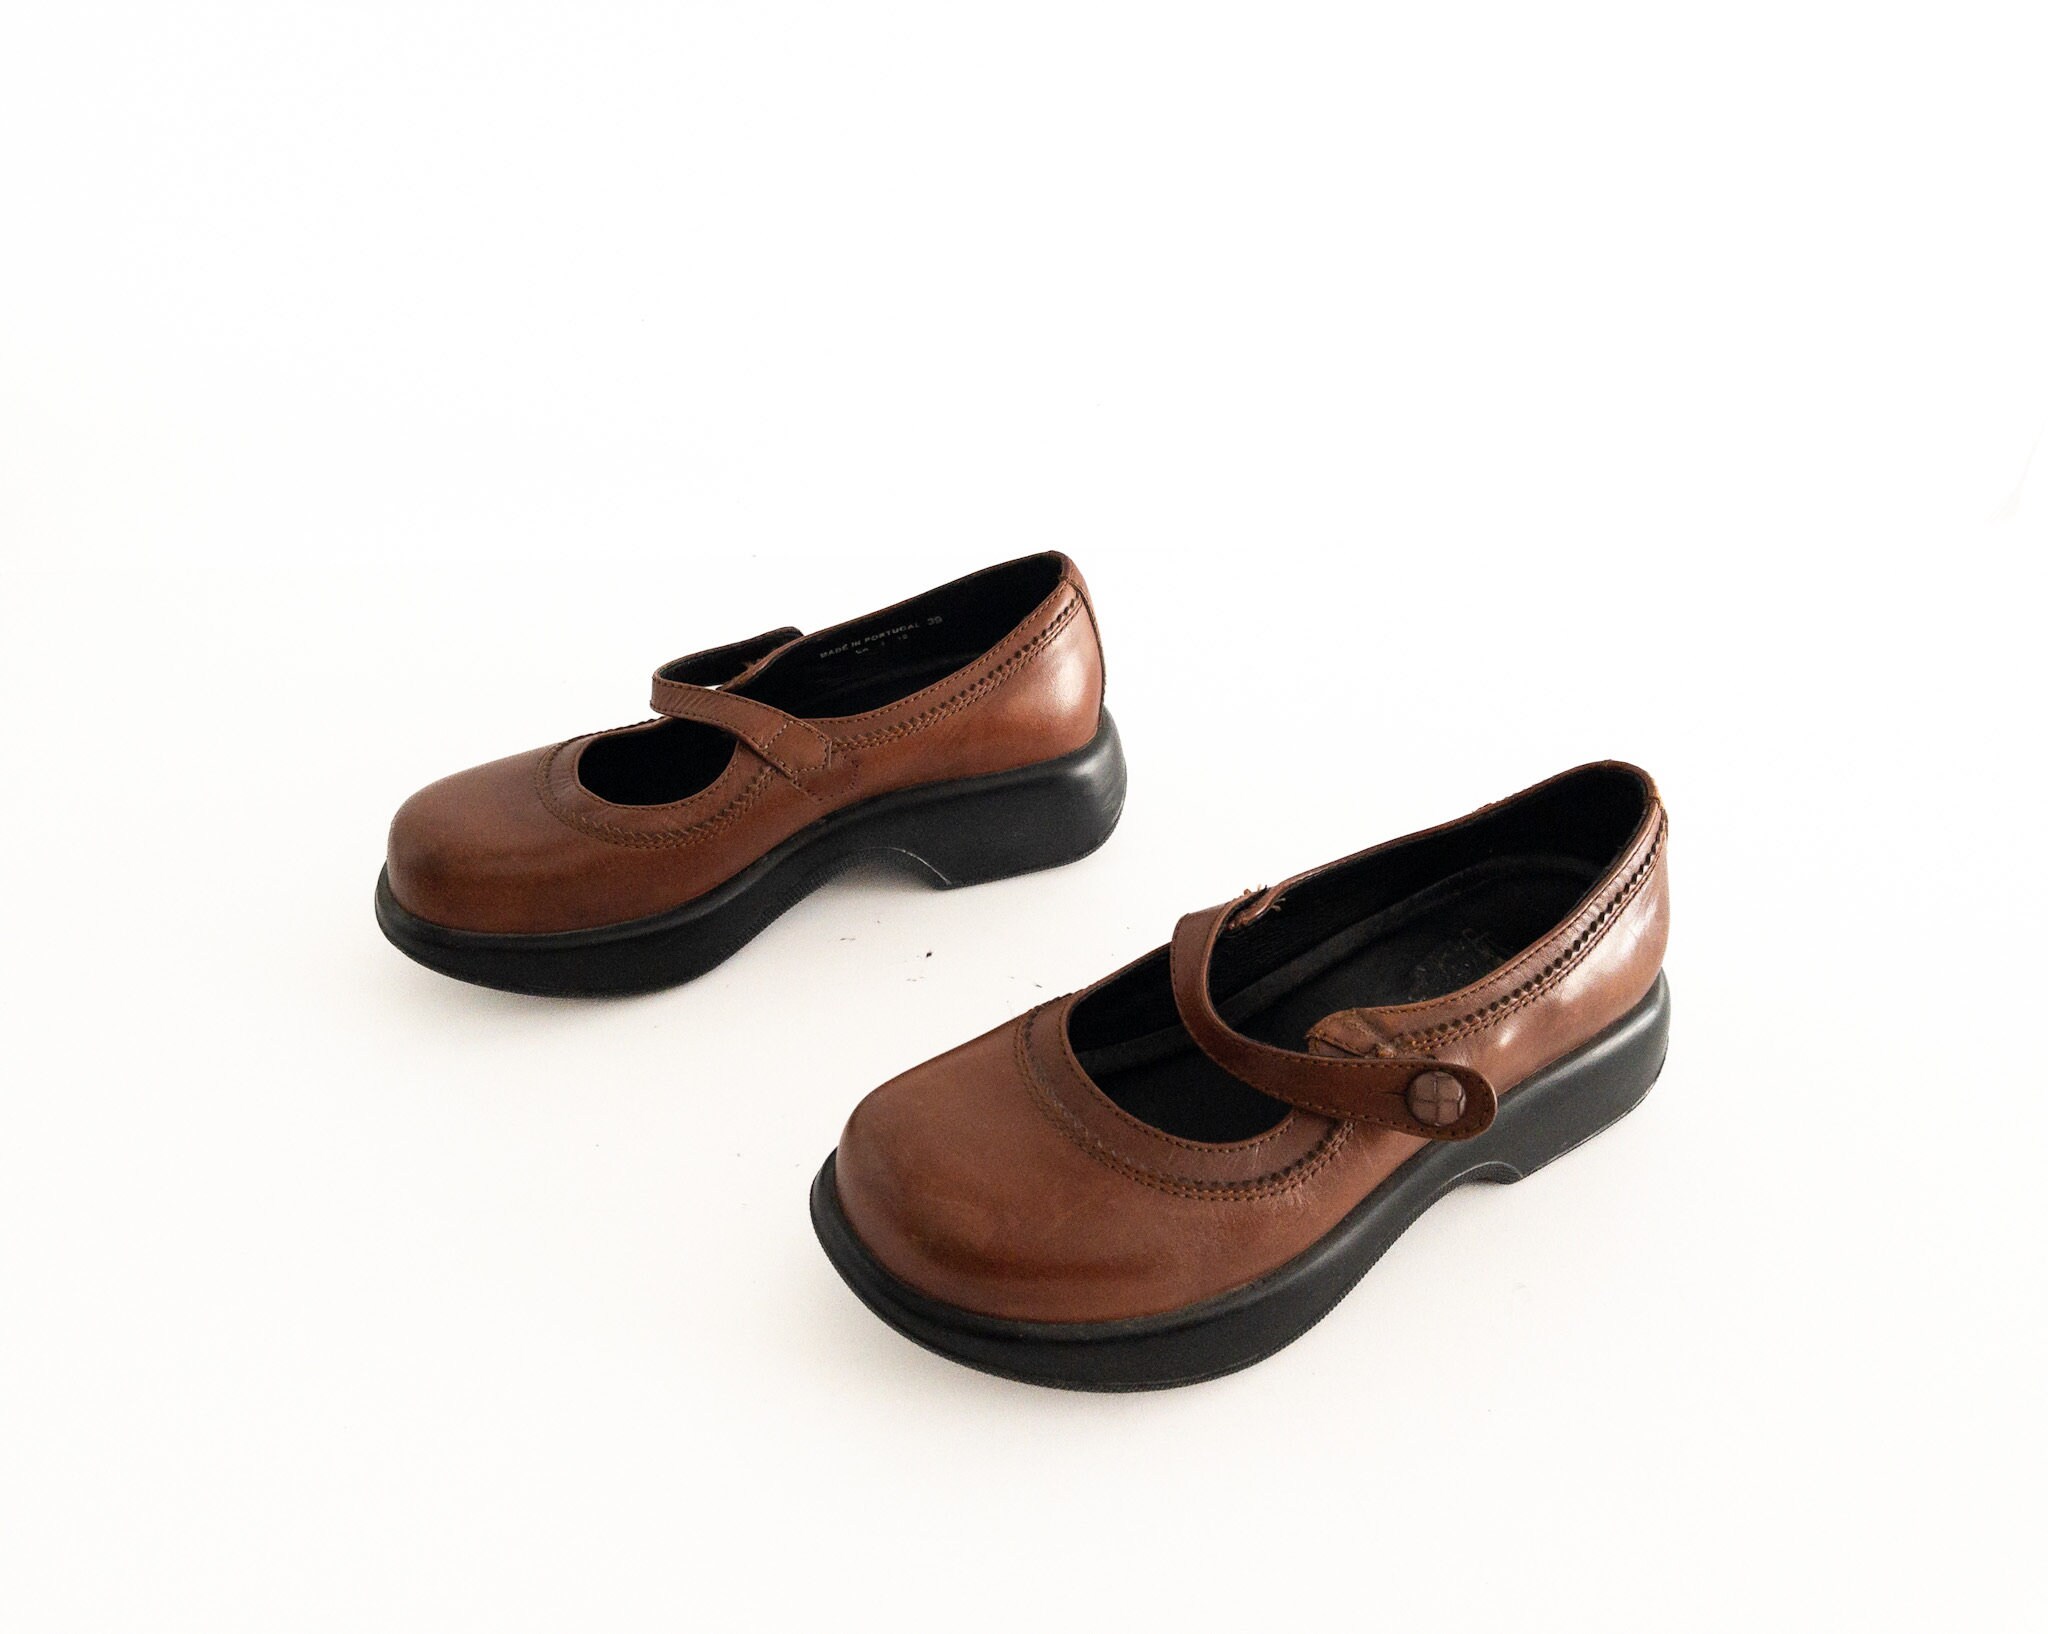 Dansko Dansko~Brown Leather Mary Jane Slip-On Shoes size 40~NWOB 